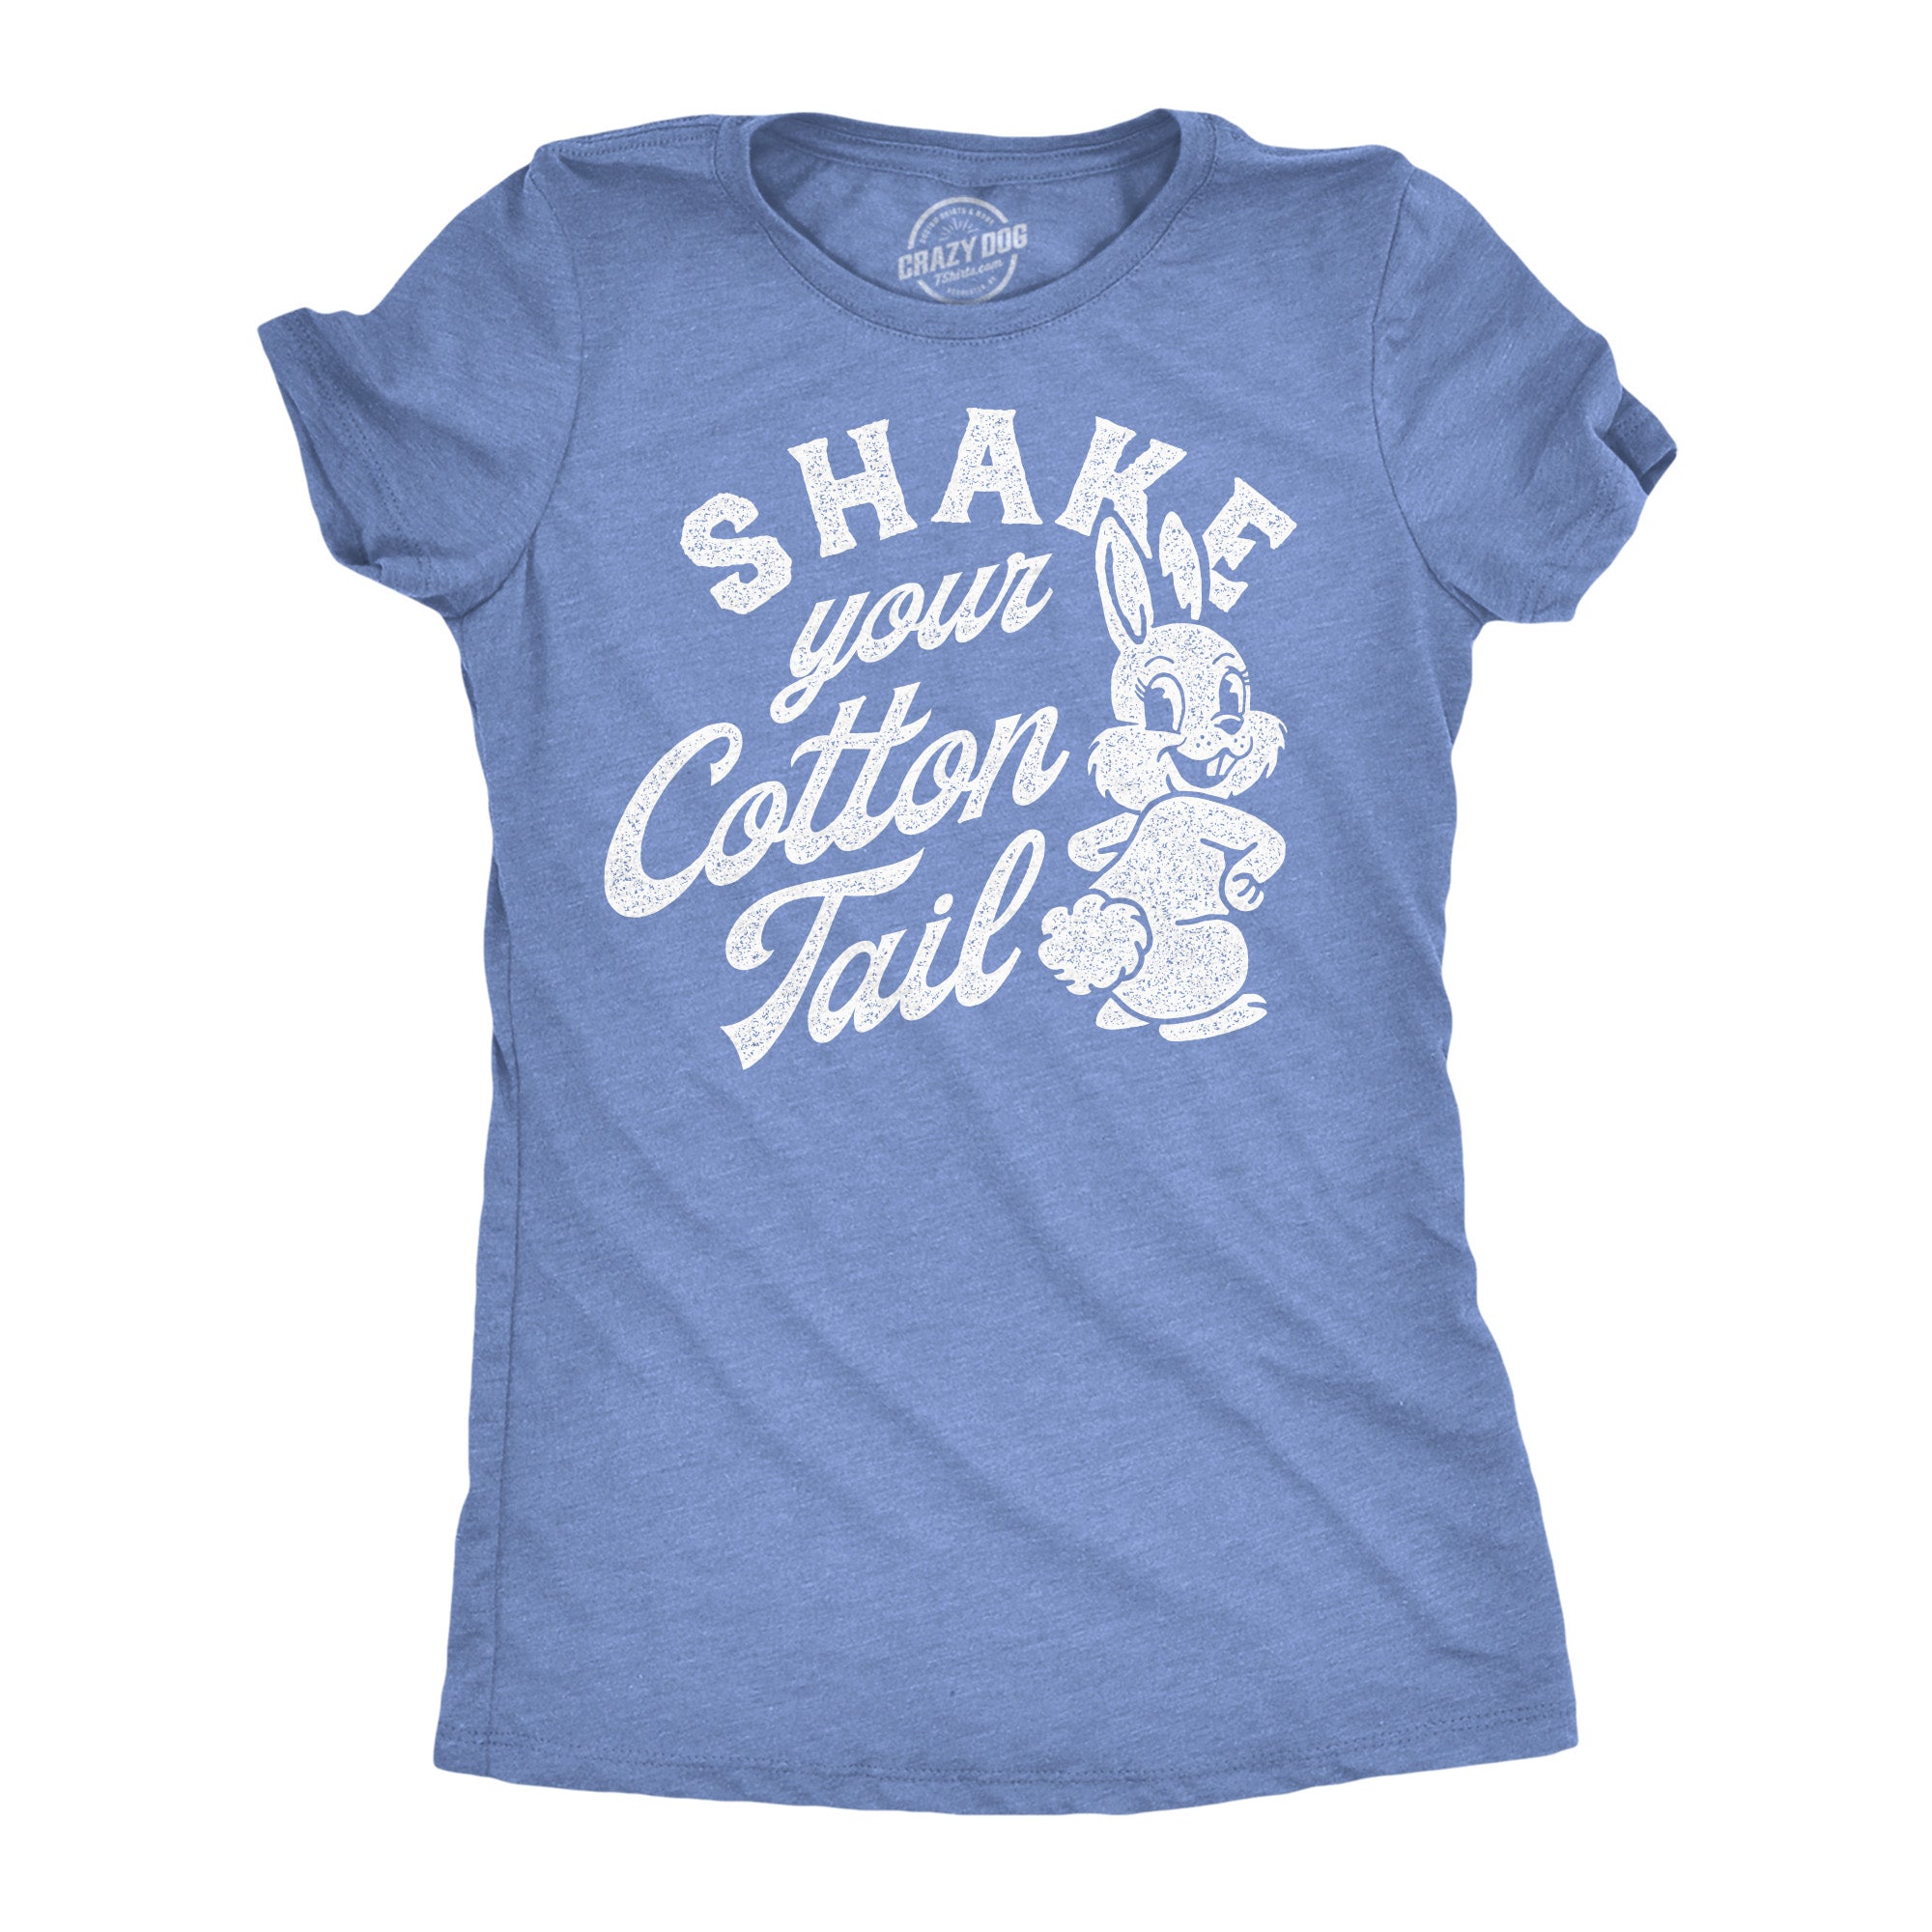 Funny Light Heather Blue - Shake Your Cotton Tail Shake Your Cotton Tail Womens T Shirt Nerdy Easter animal sarcastic Tee